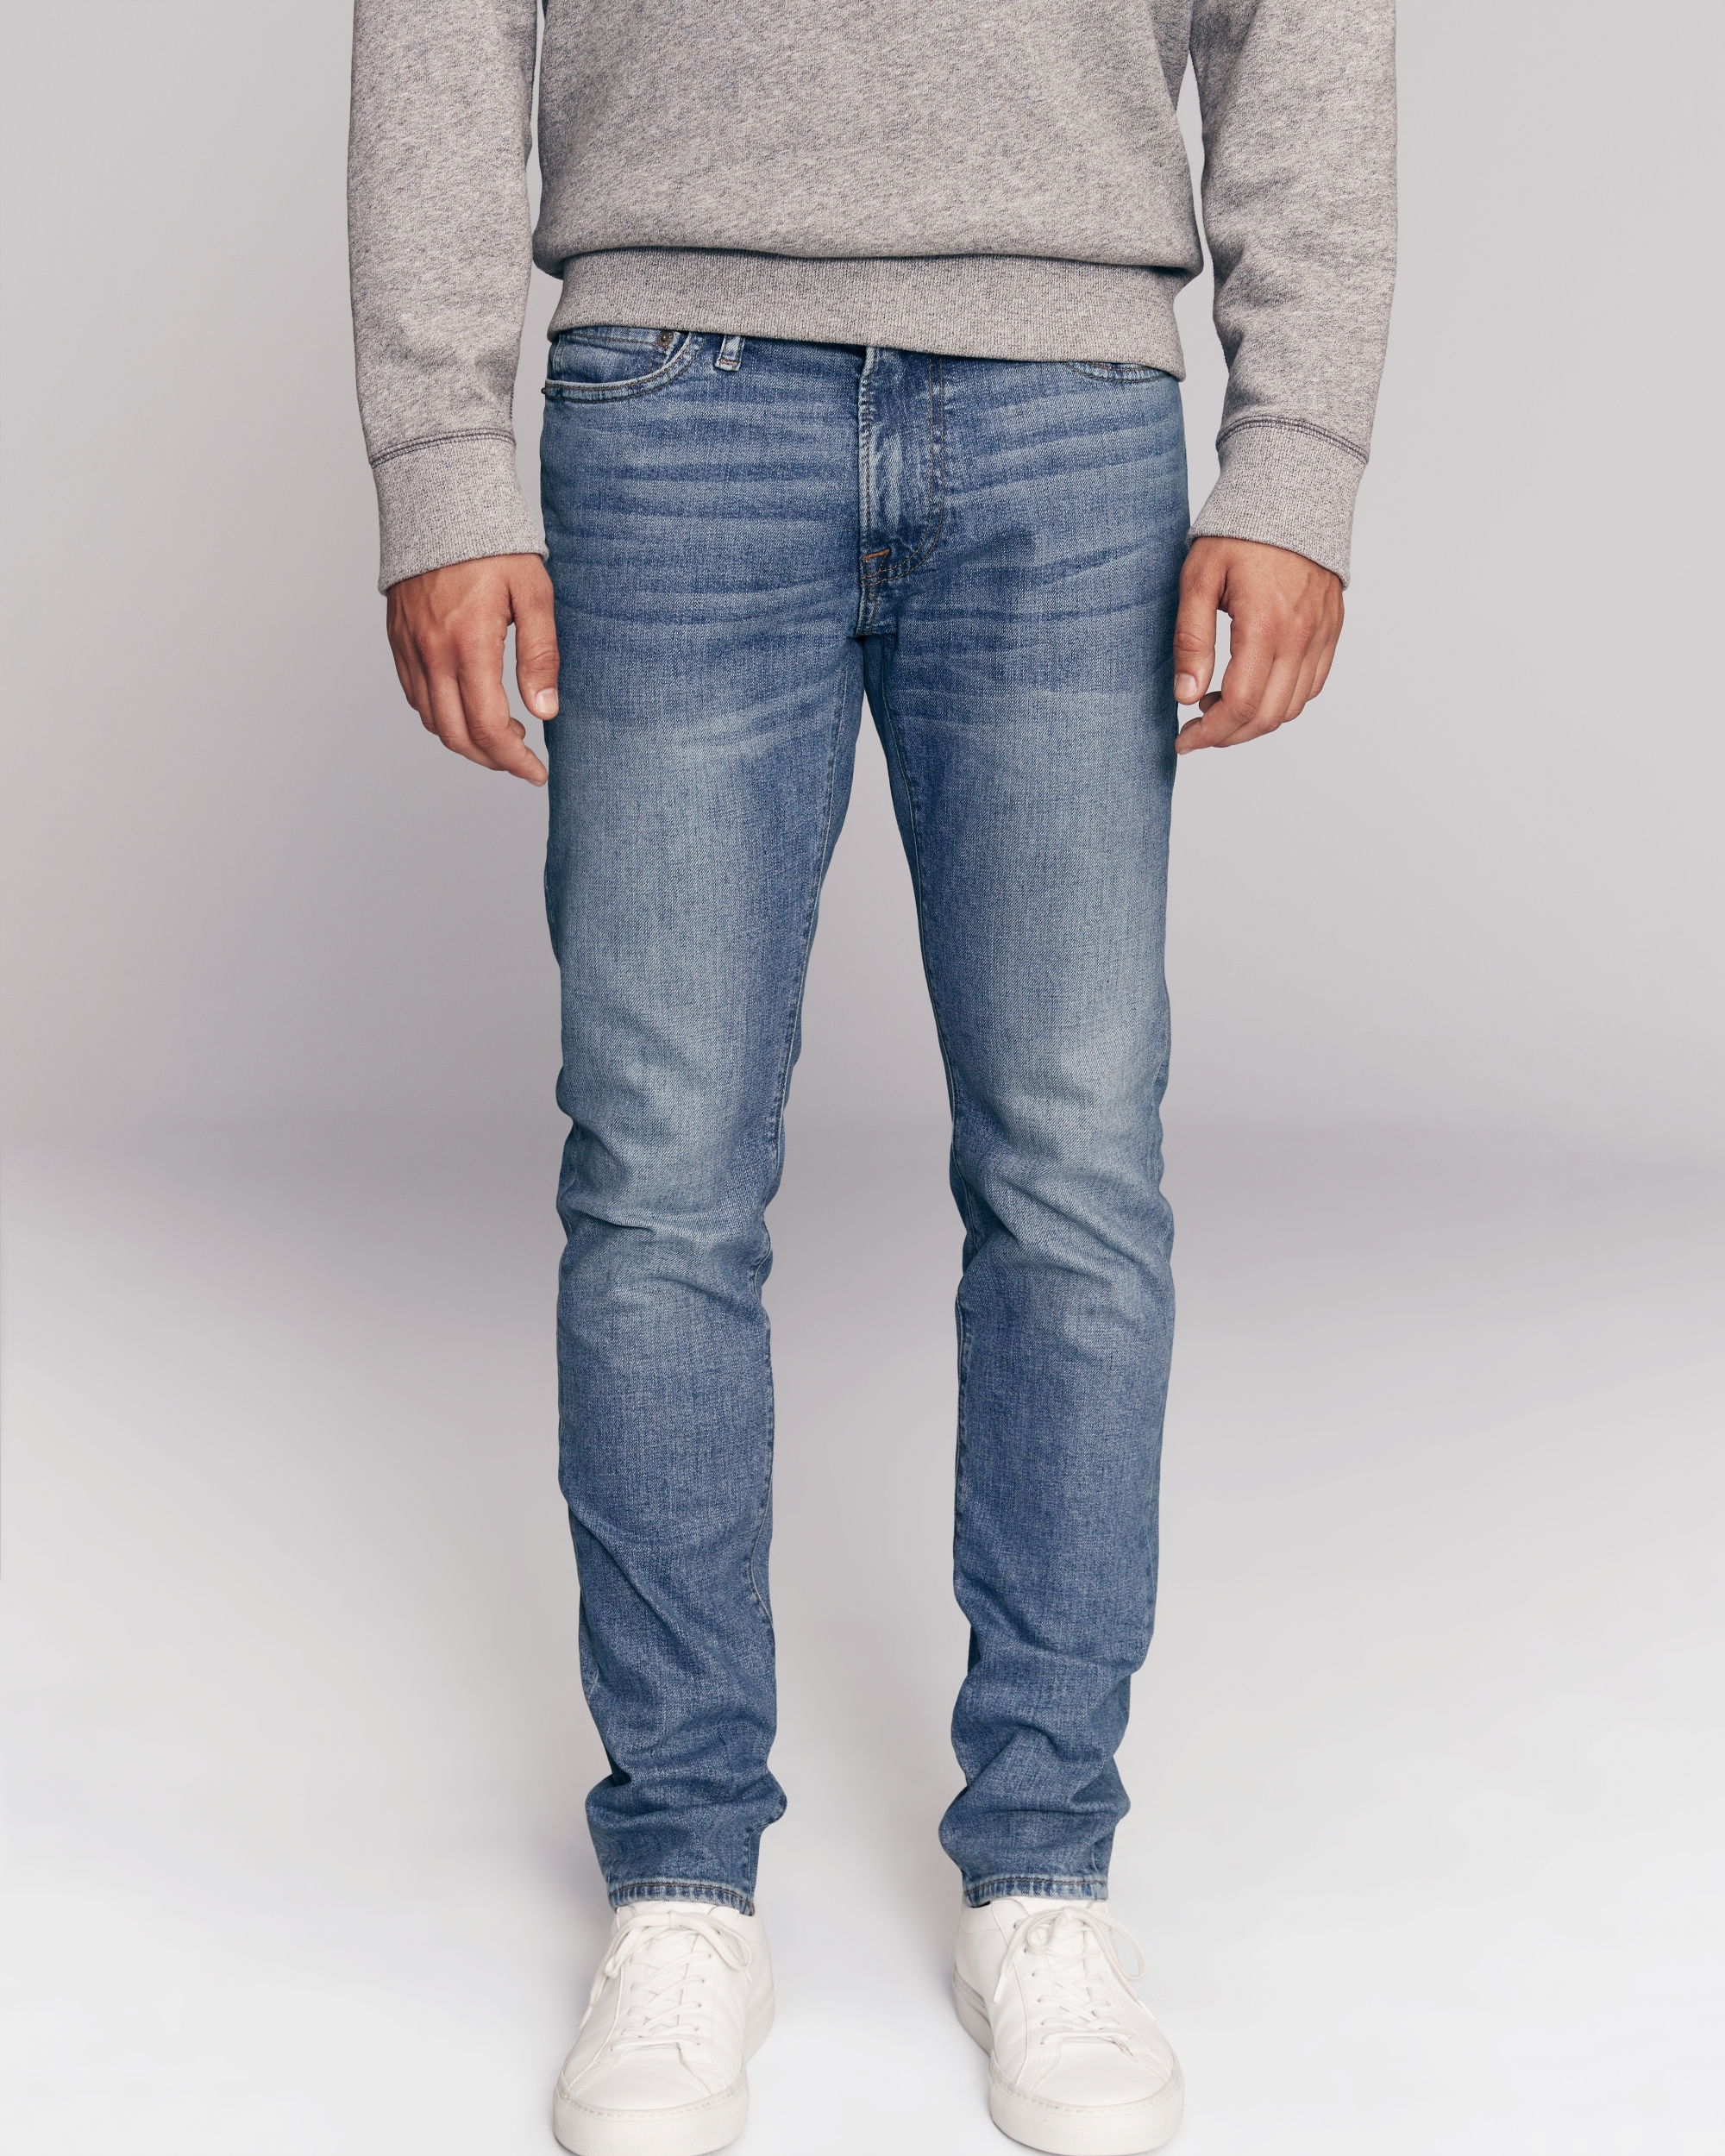 abercrombie extreme skinny jeans